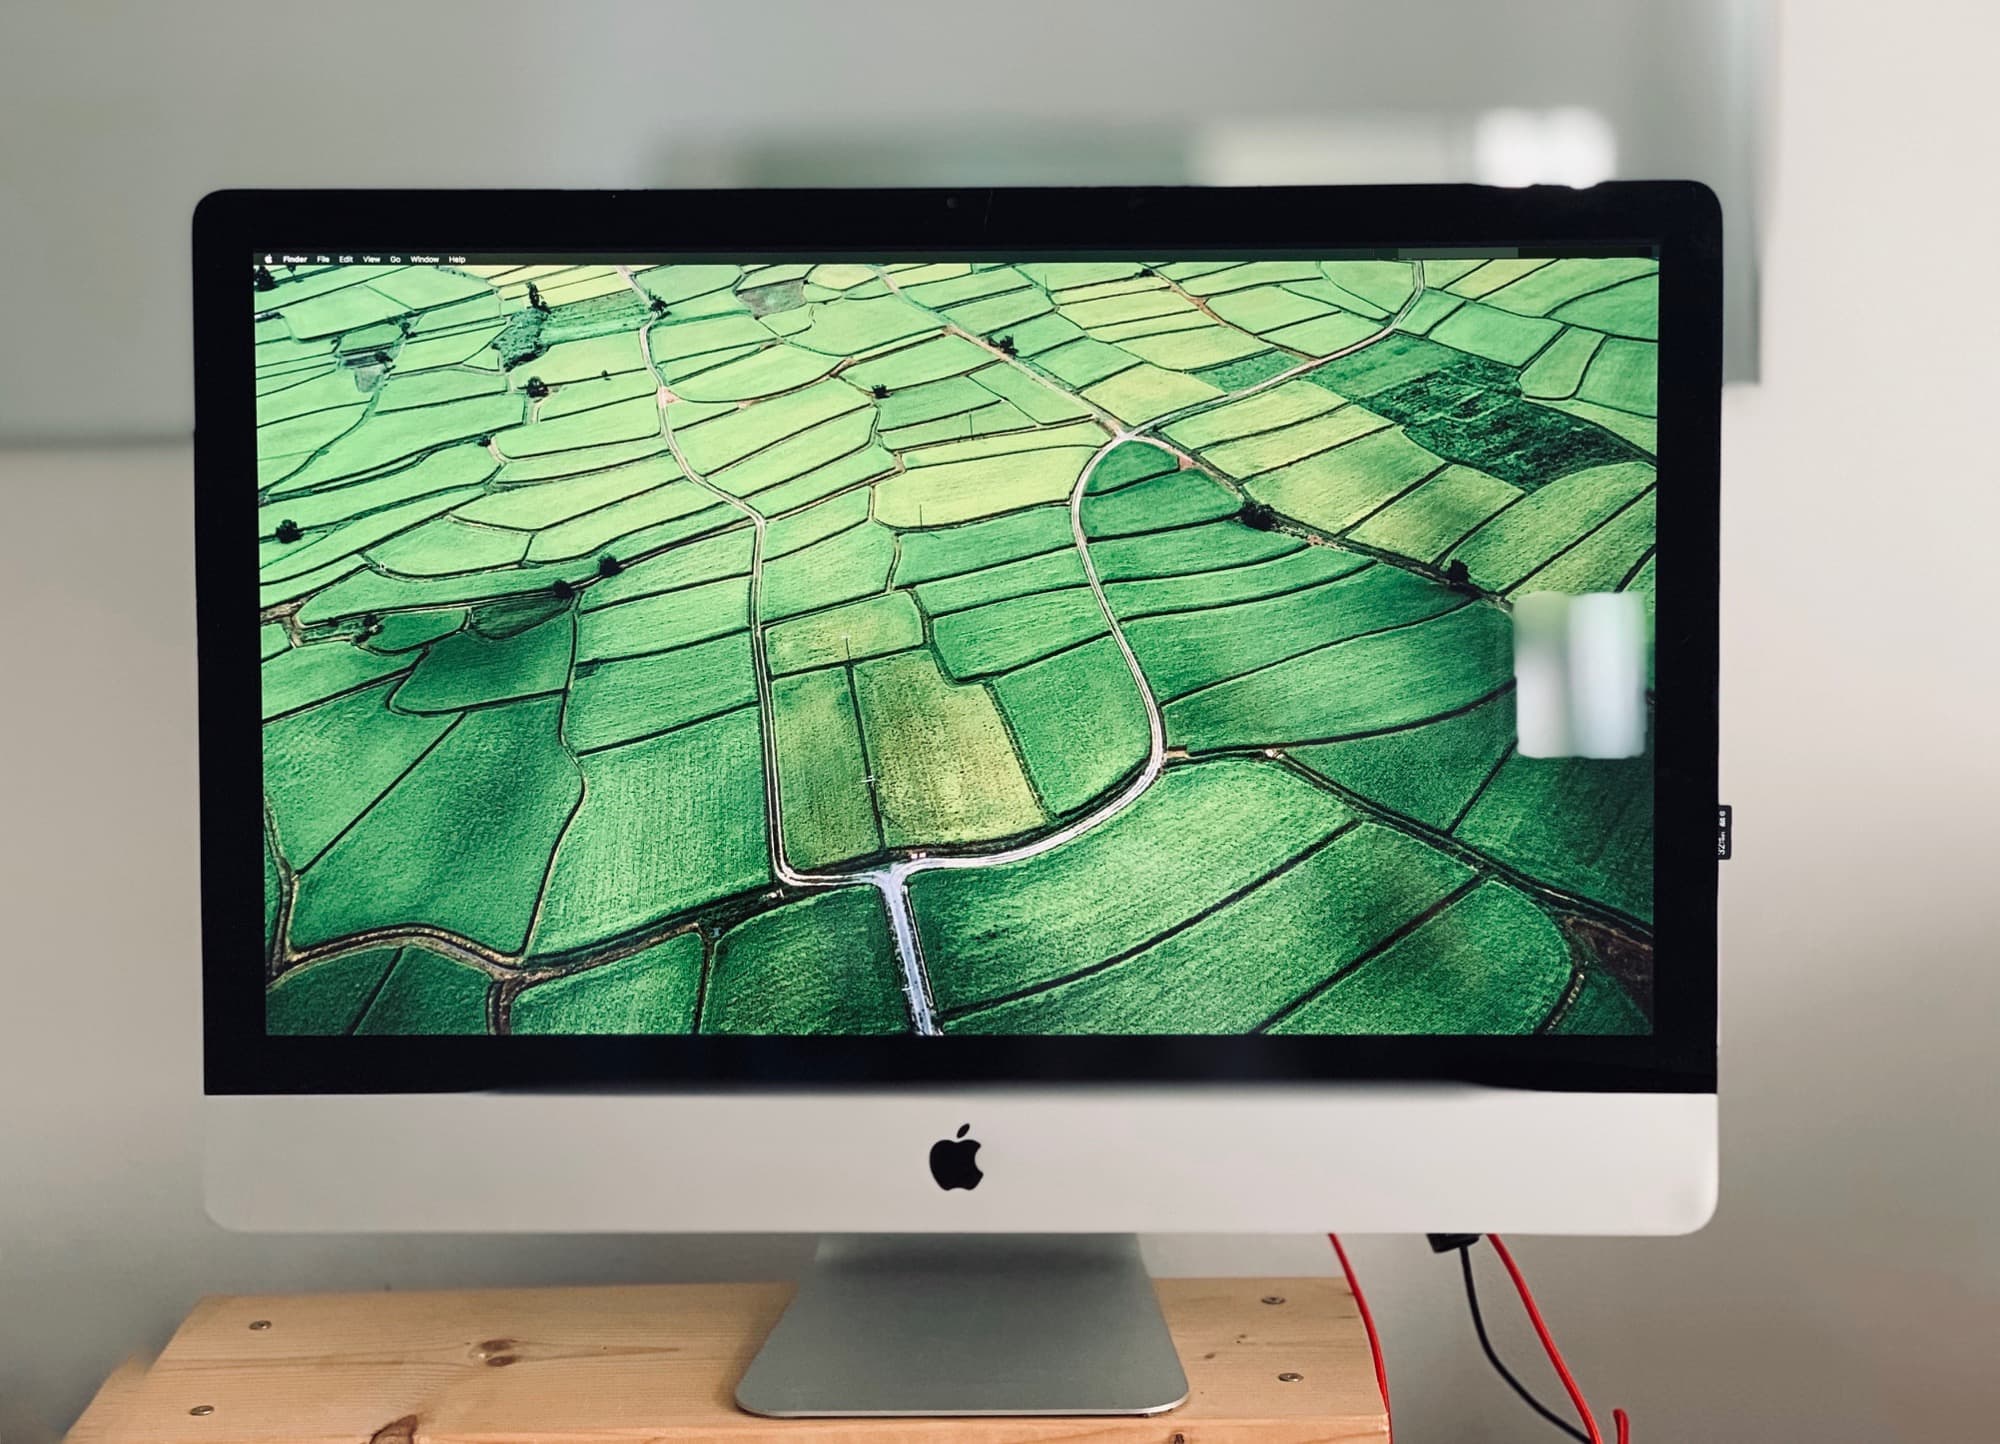 Make your Mac match its surroundings.